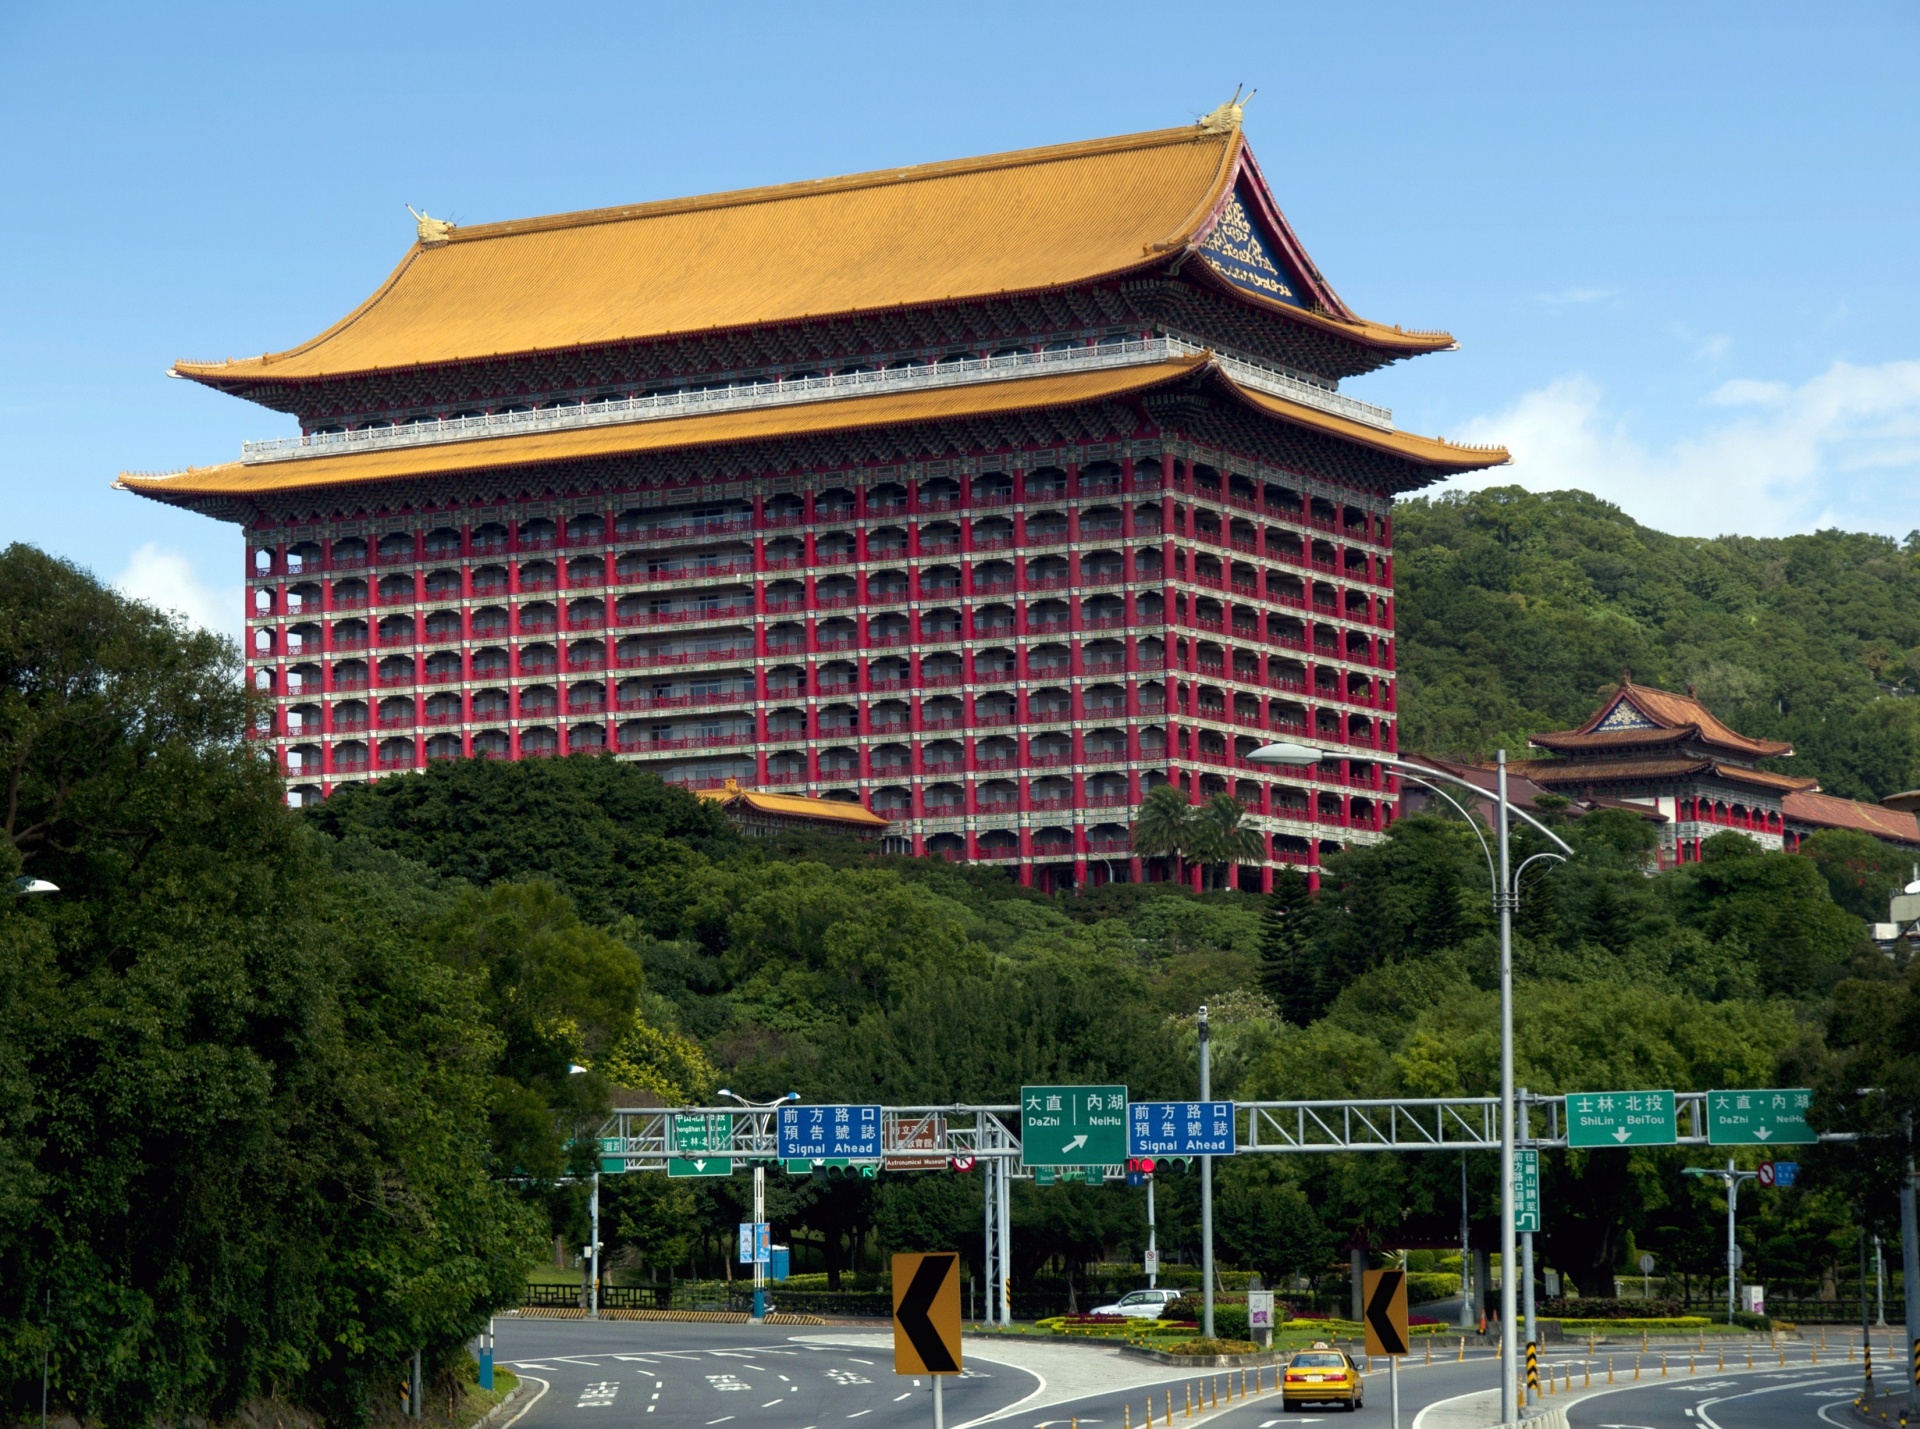 The Taipei Grand Hotel, or Yuanshan Hotel, Taipei, Taiwan